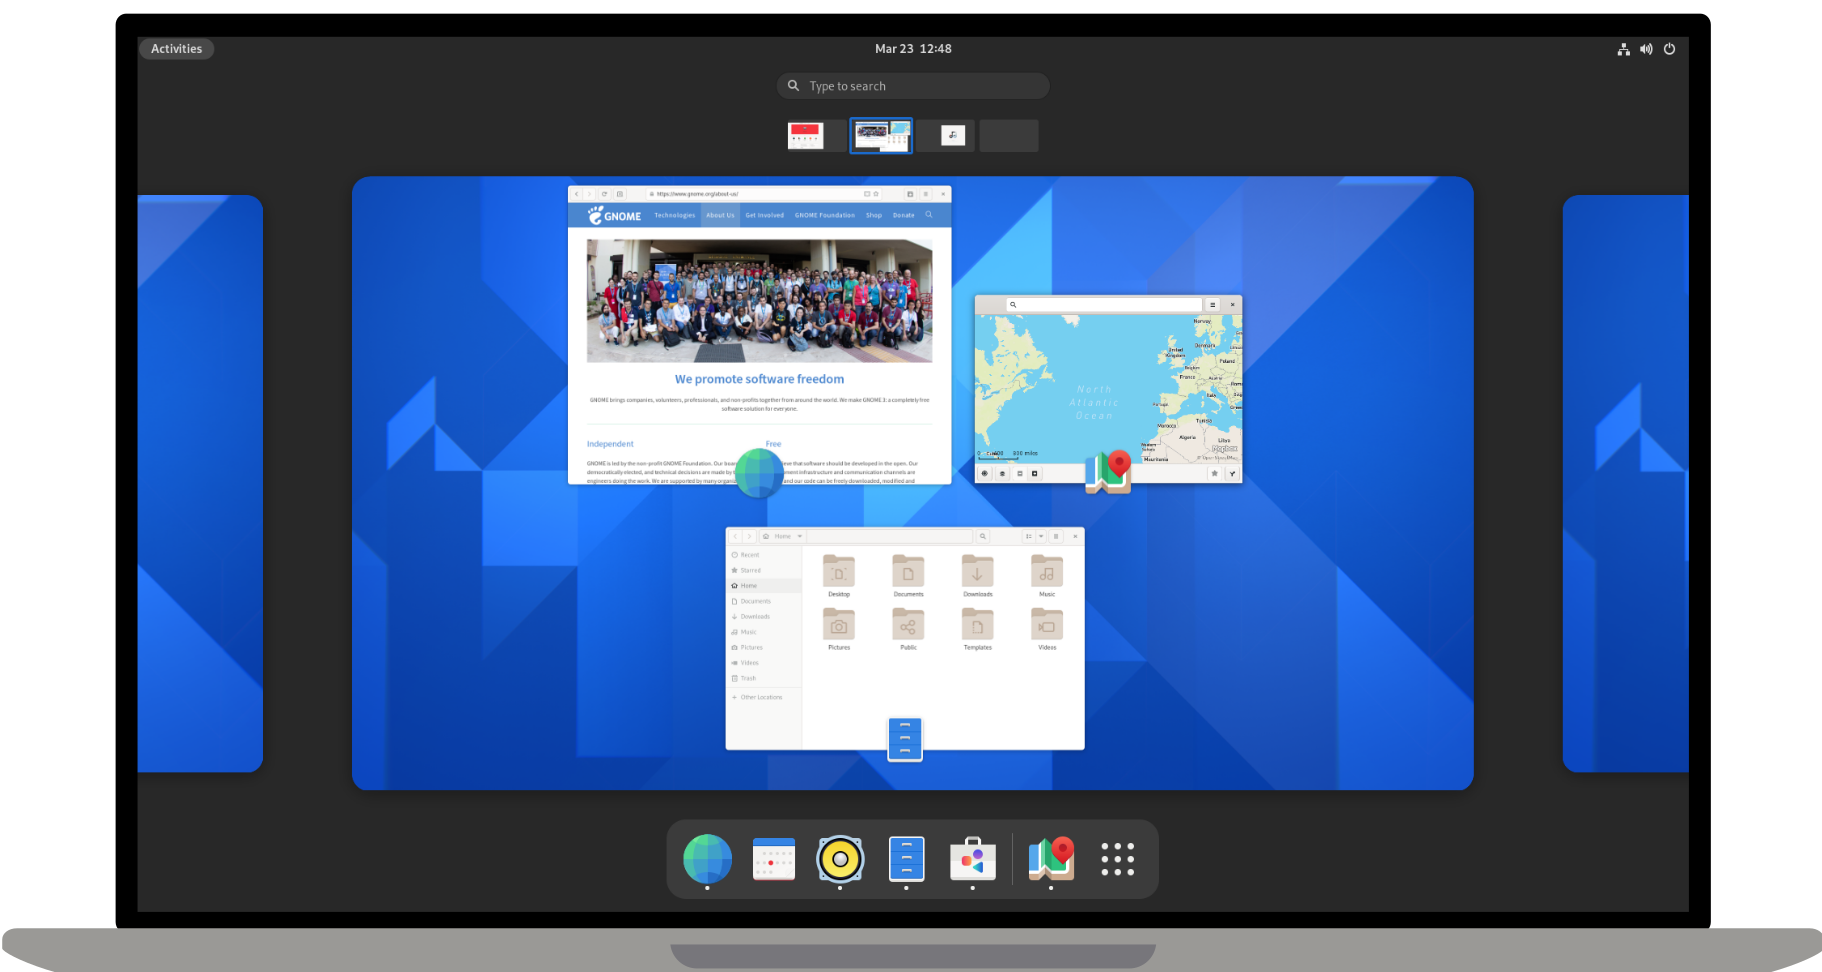 GNOME Desktop Environment